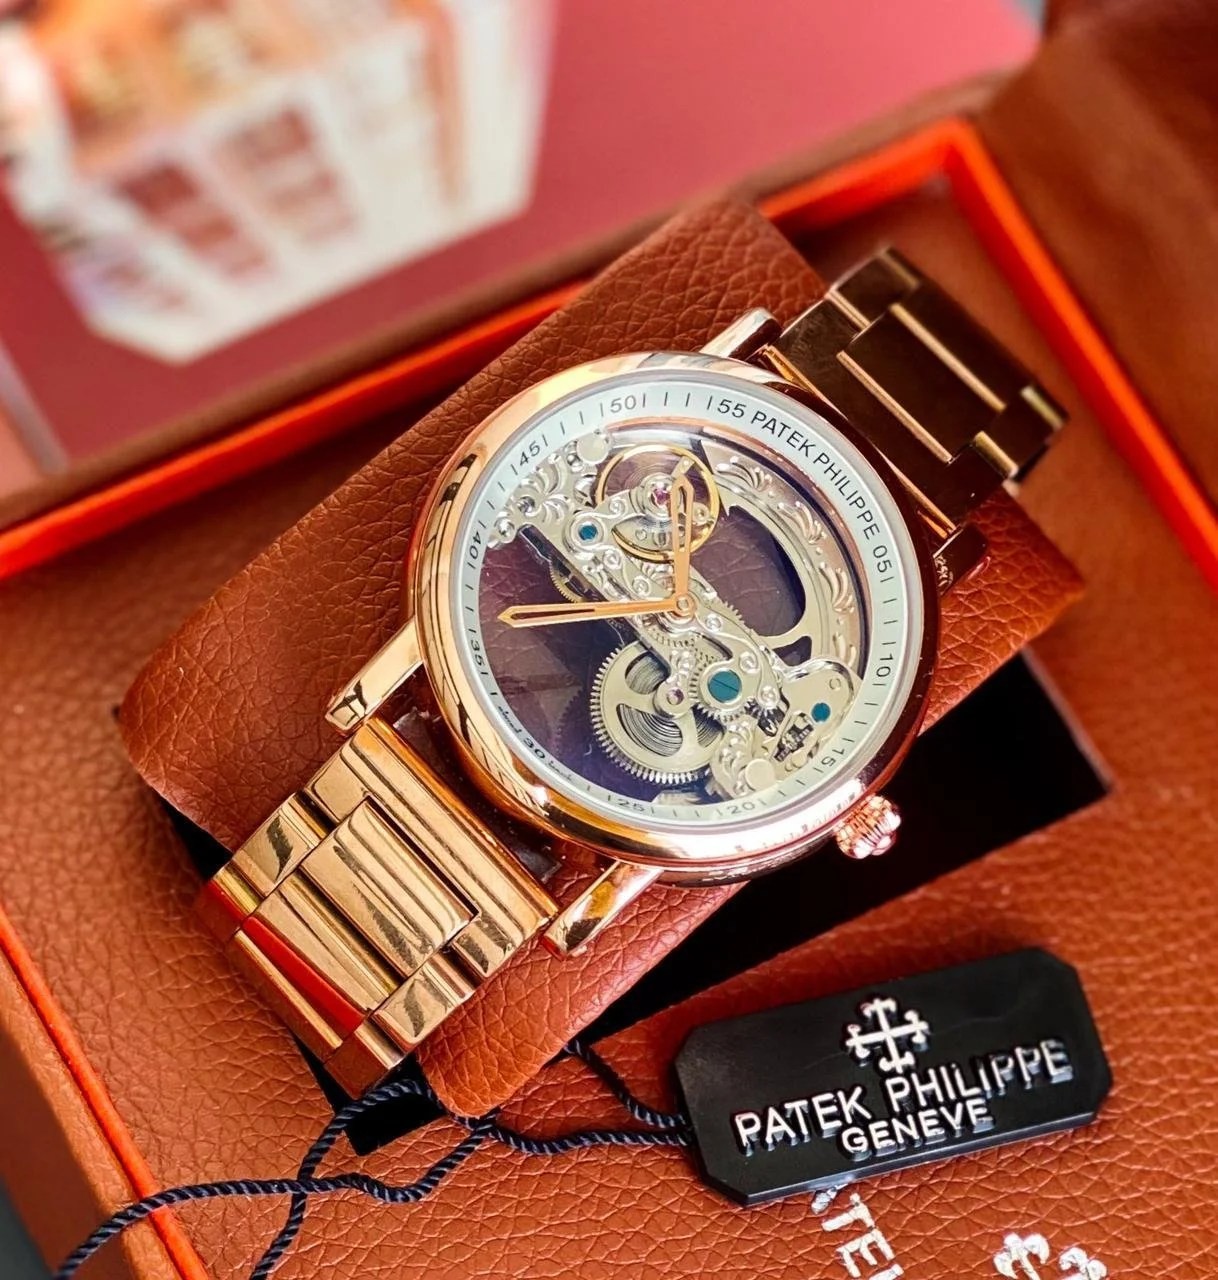 Patek Philippe - The Geneva Watch Auctio... Lot 81 May 2019 | Phillips